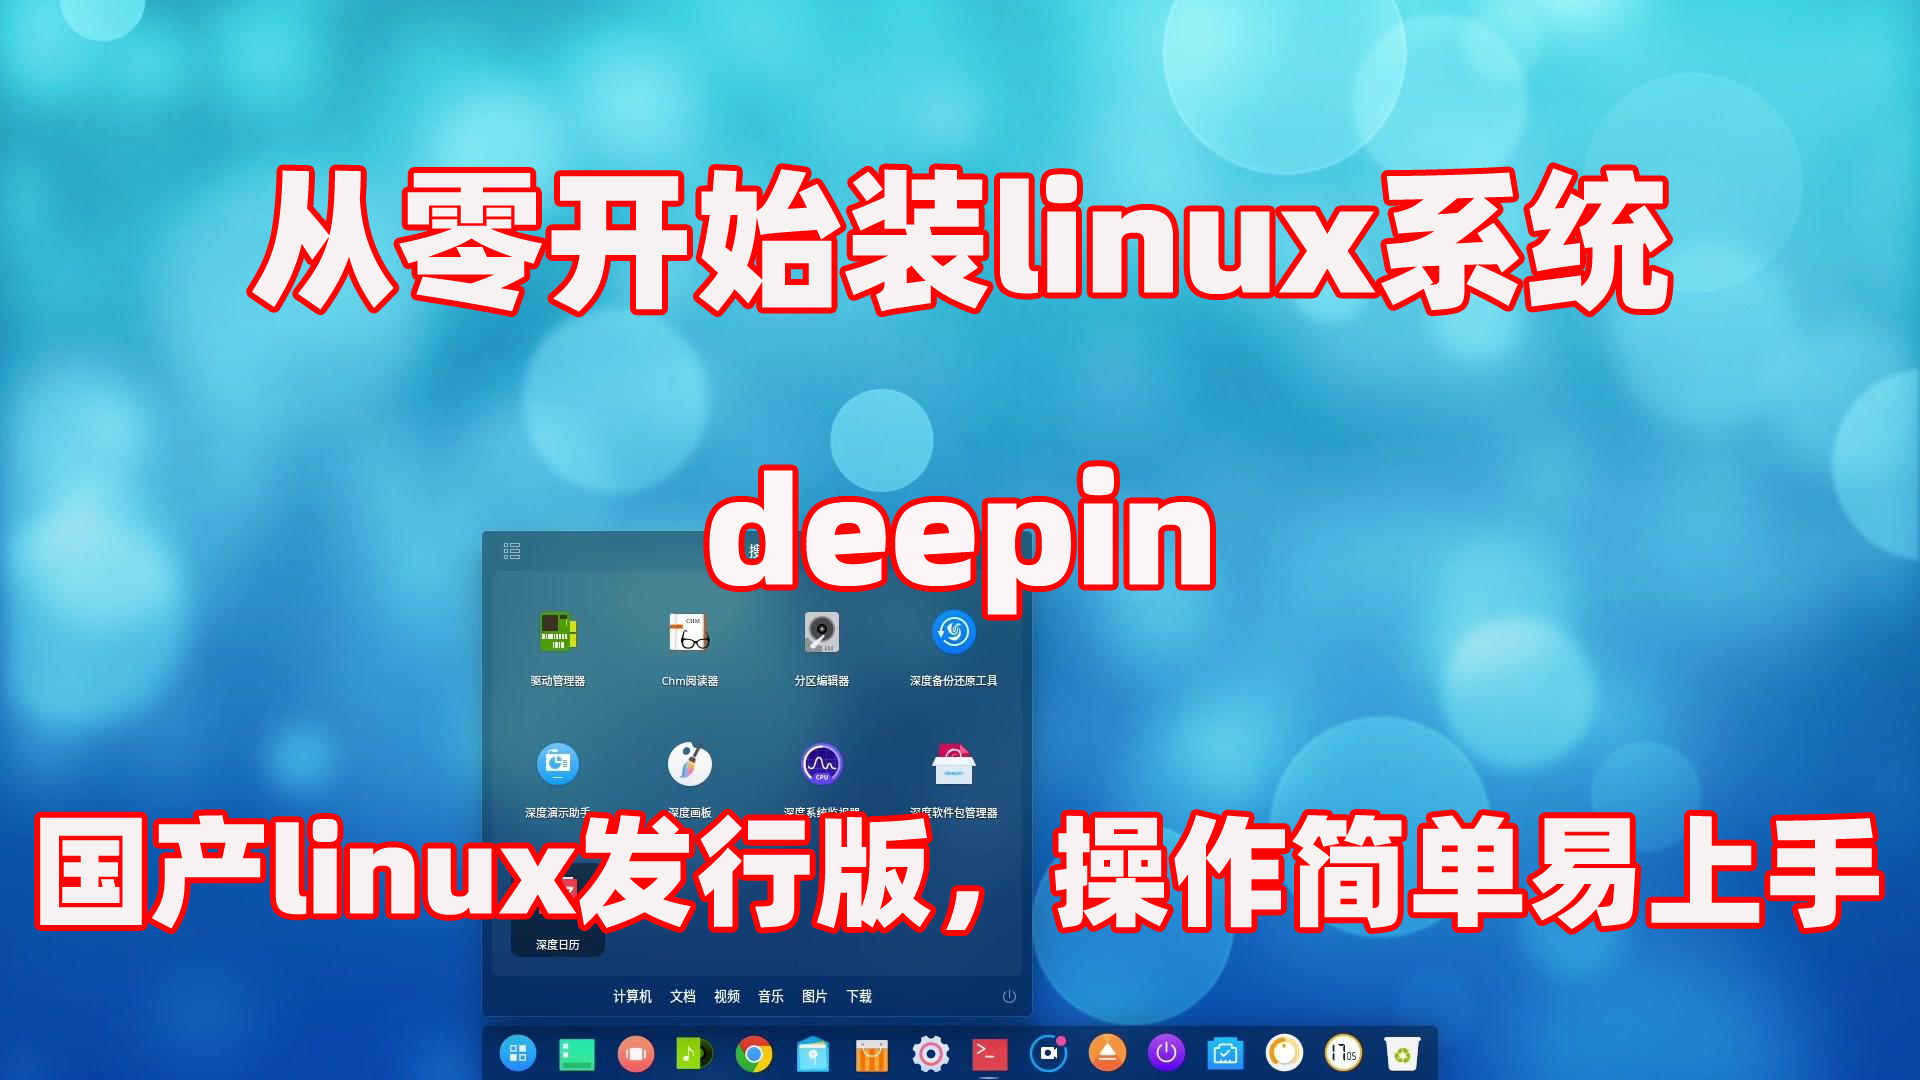 ubuntu 安装中文语言包-Ubuntu系统安装中文语言包，让界面更贴近生活习惯，操作方法详解